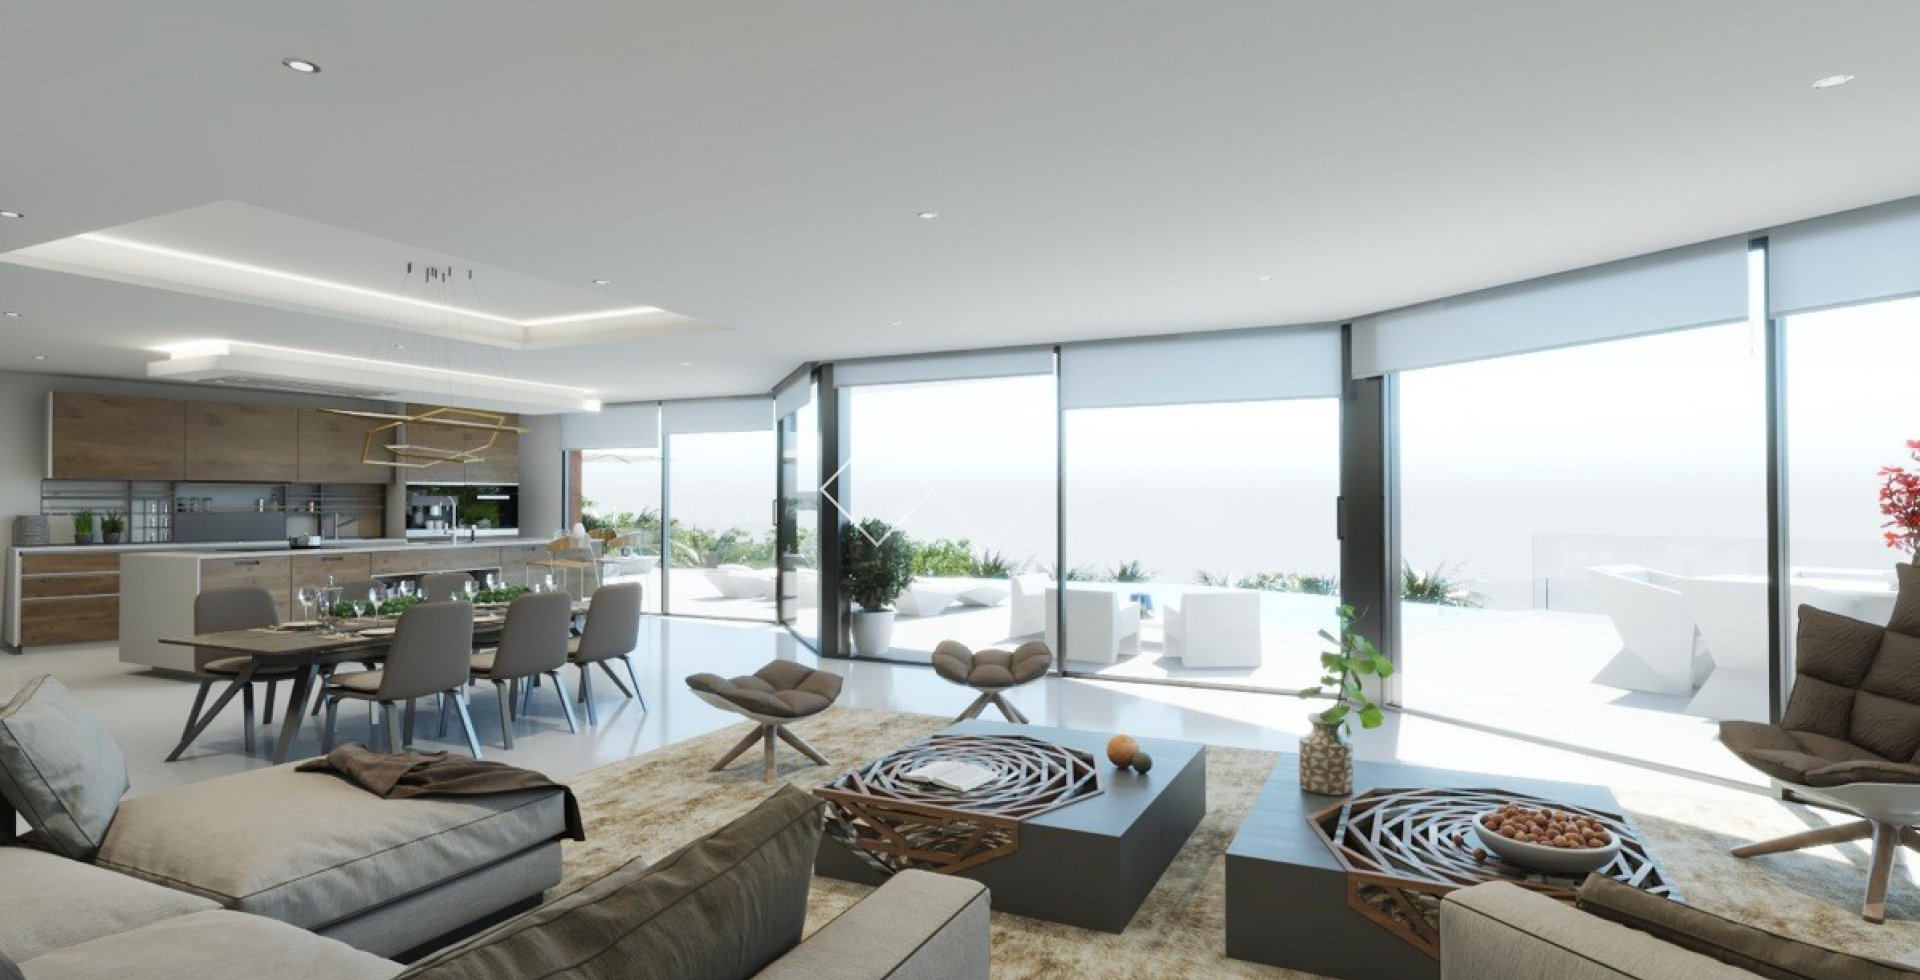 salon - Villa moderna por construir en Benissa con vistas al mar  